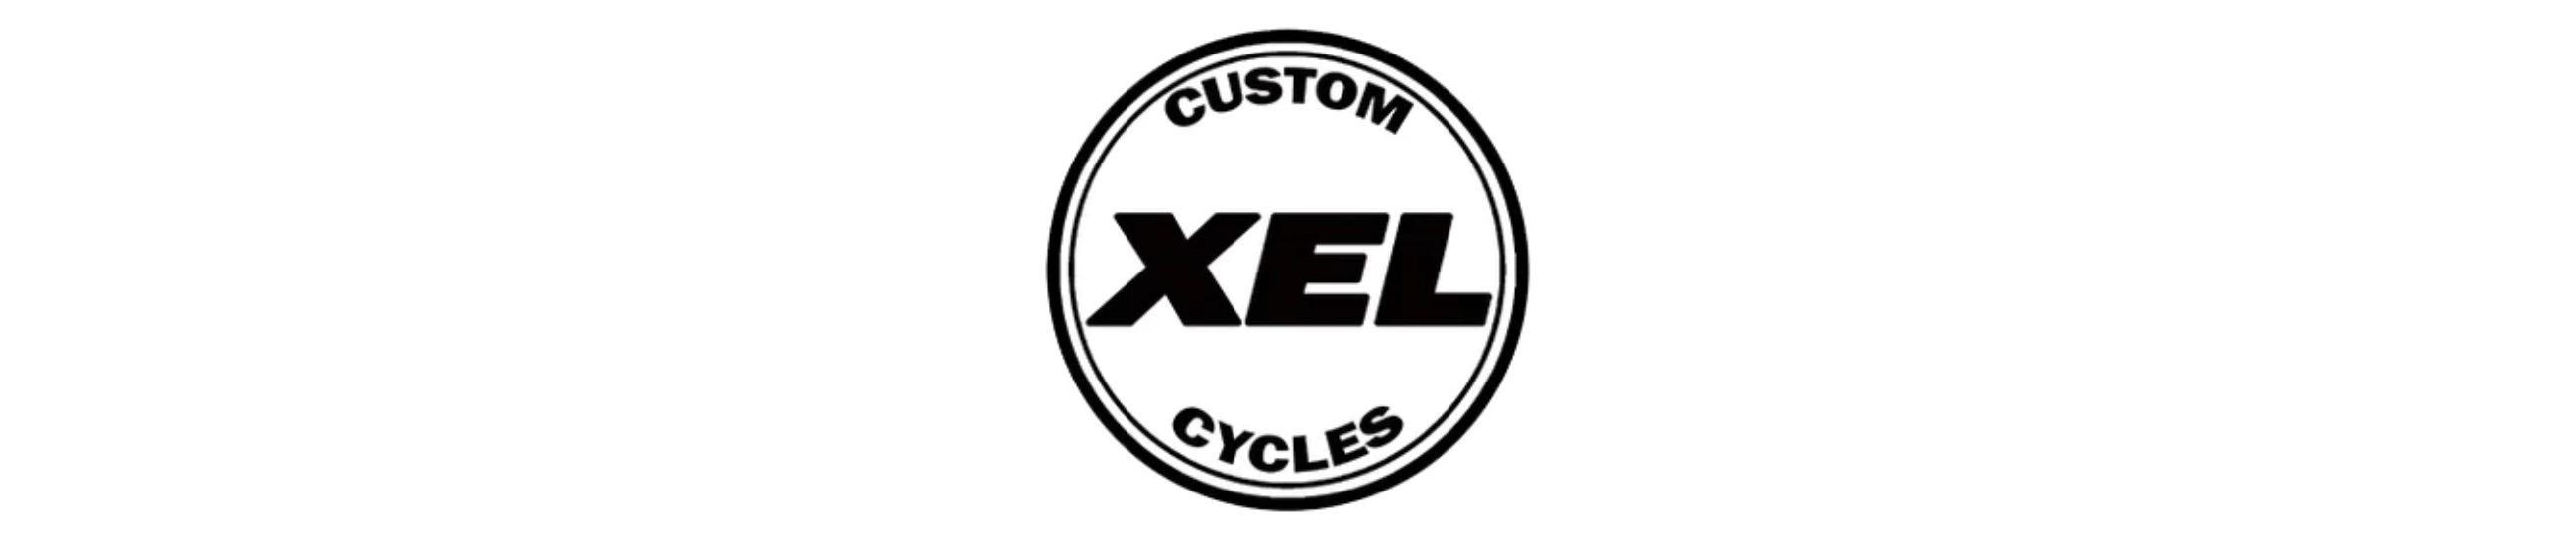 custom xel audio logo